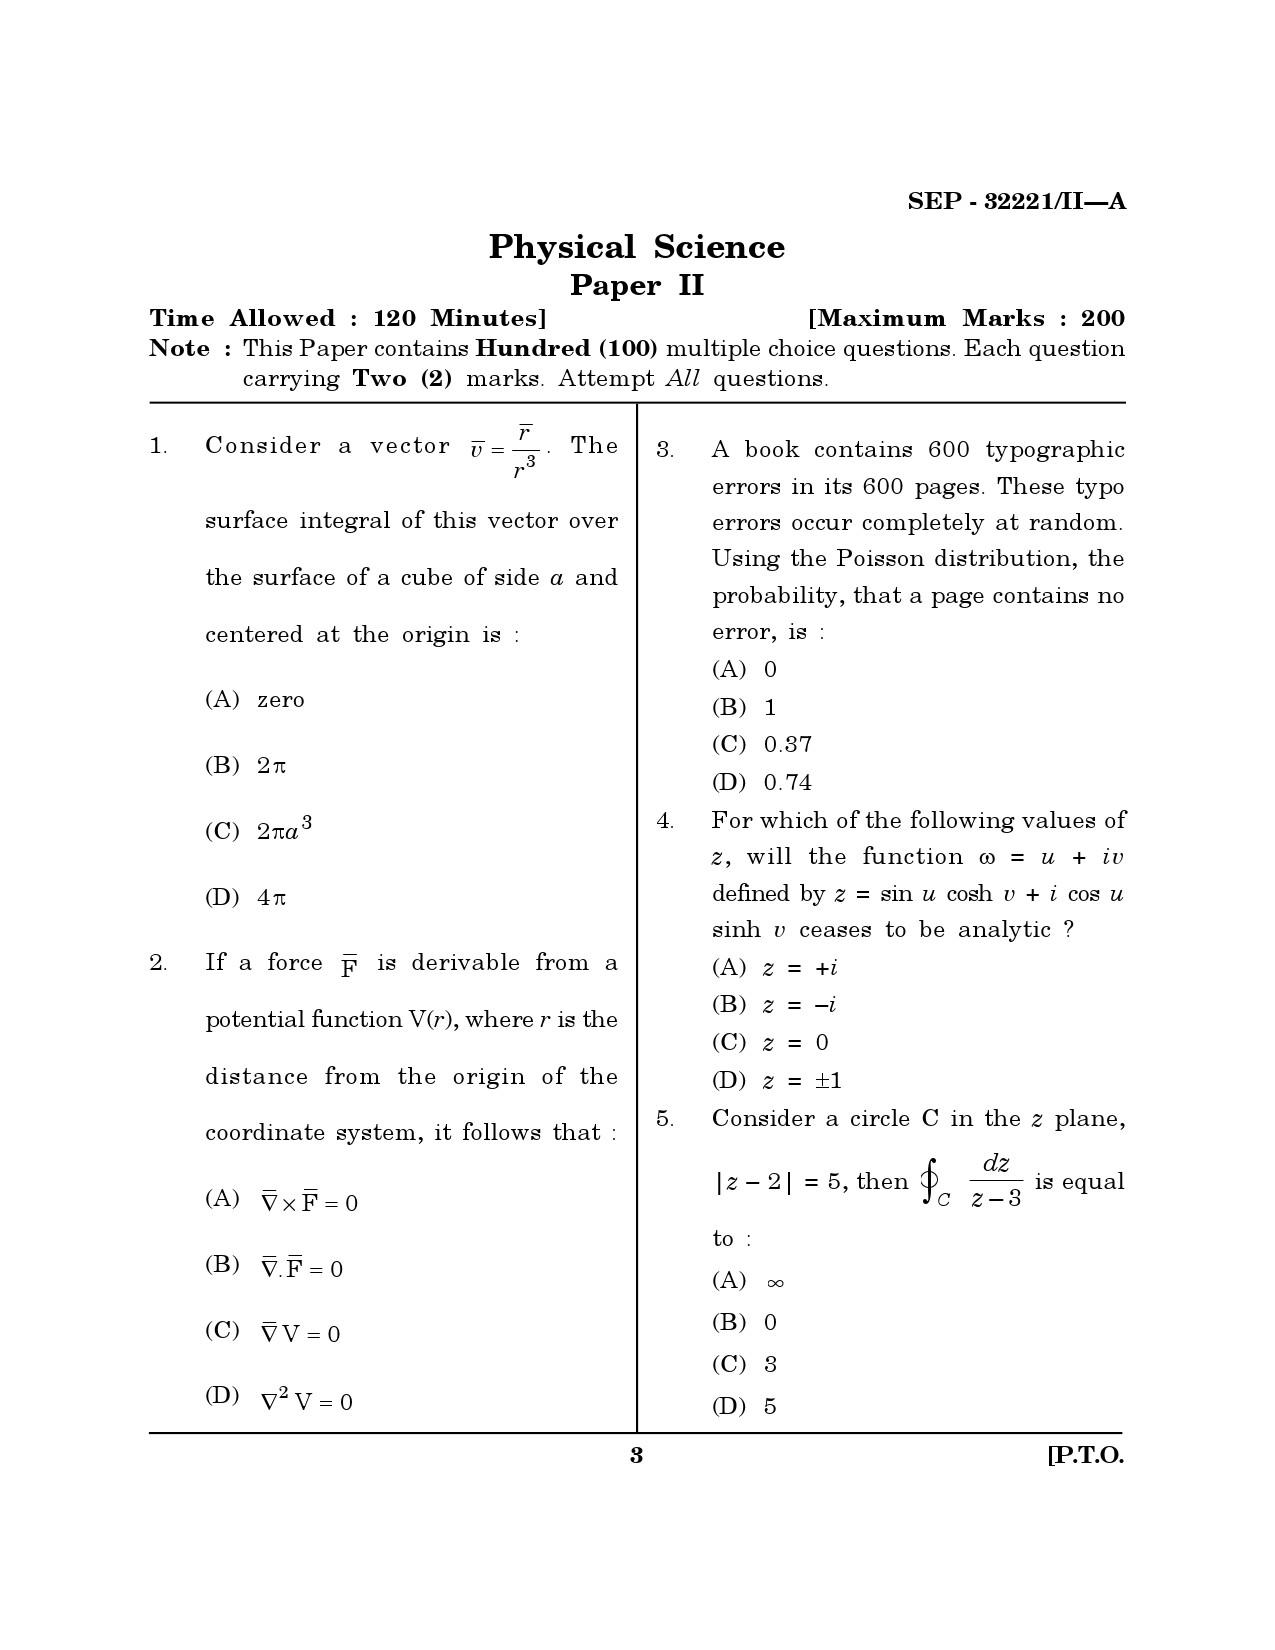 Maharashtra SET Physical Science Exam Question Paper September 2021 2